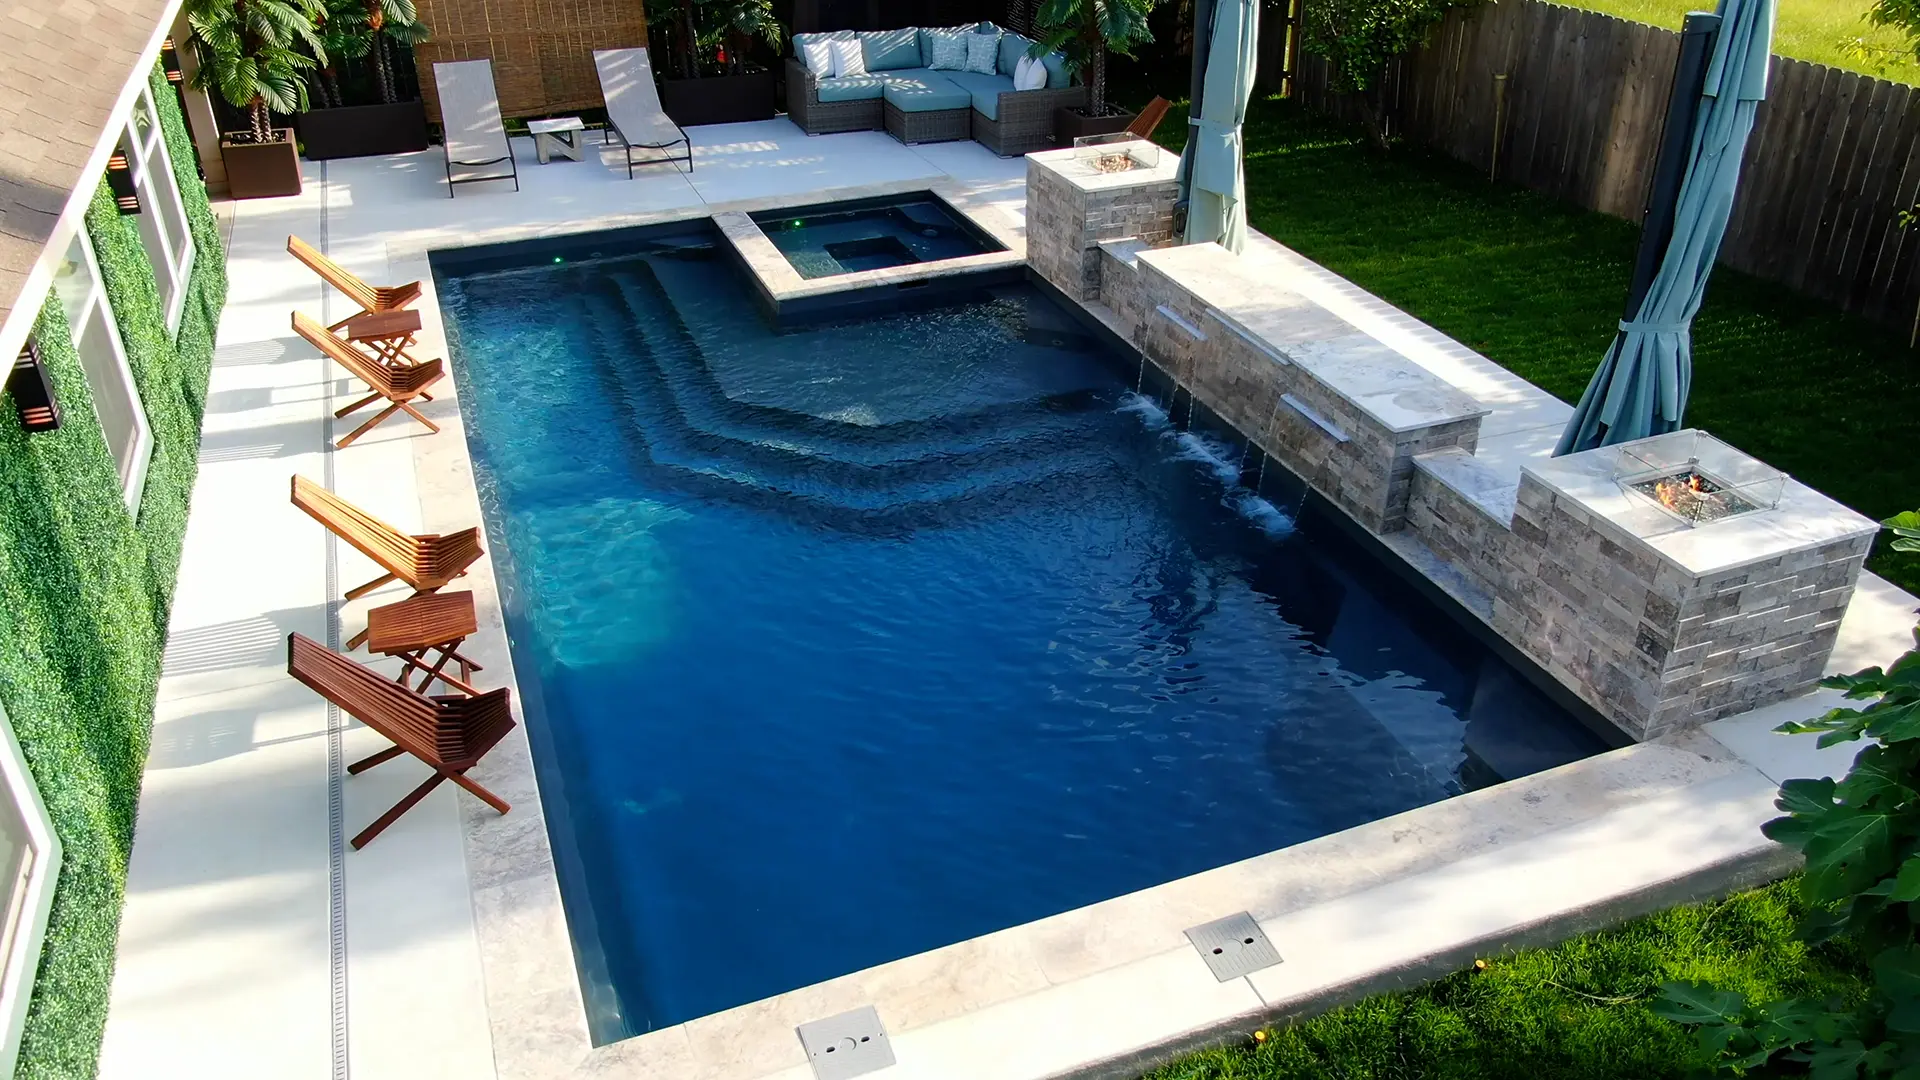 The Aviva Pools Luxe 35